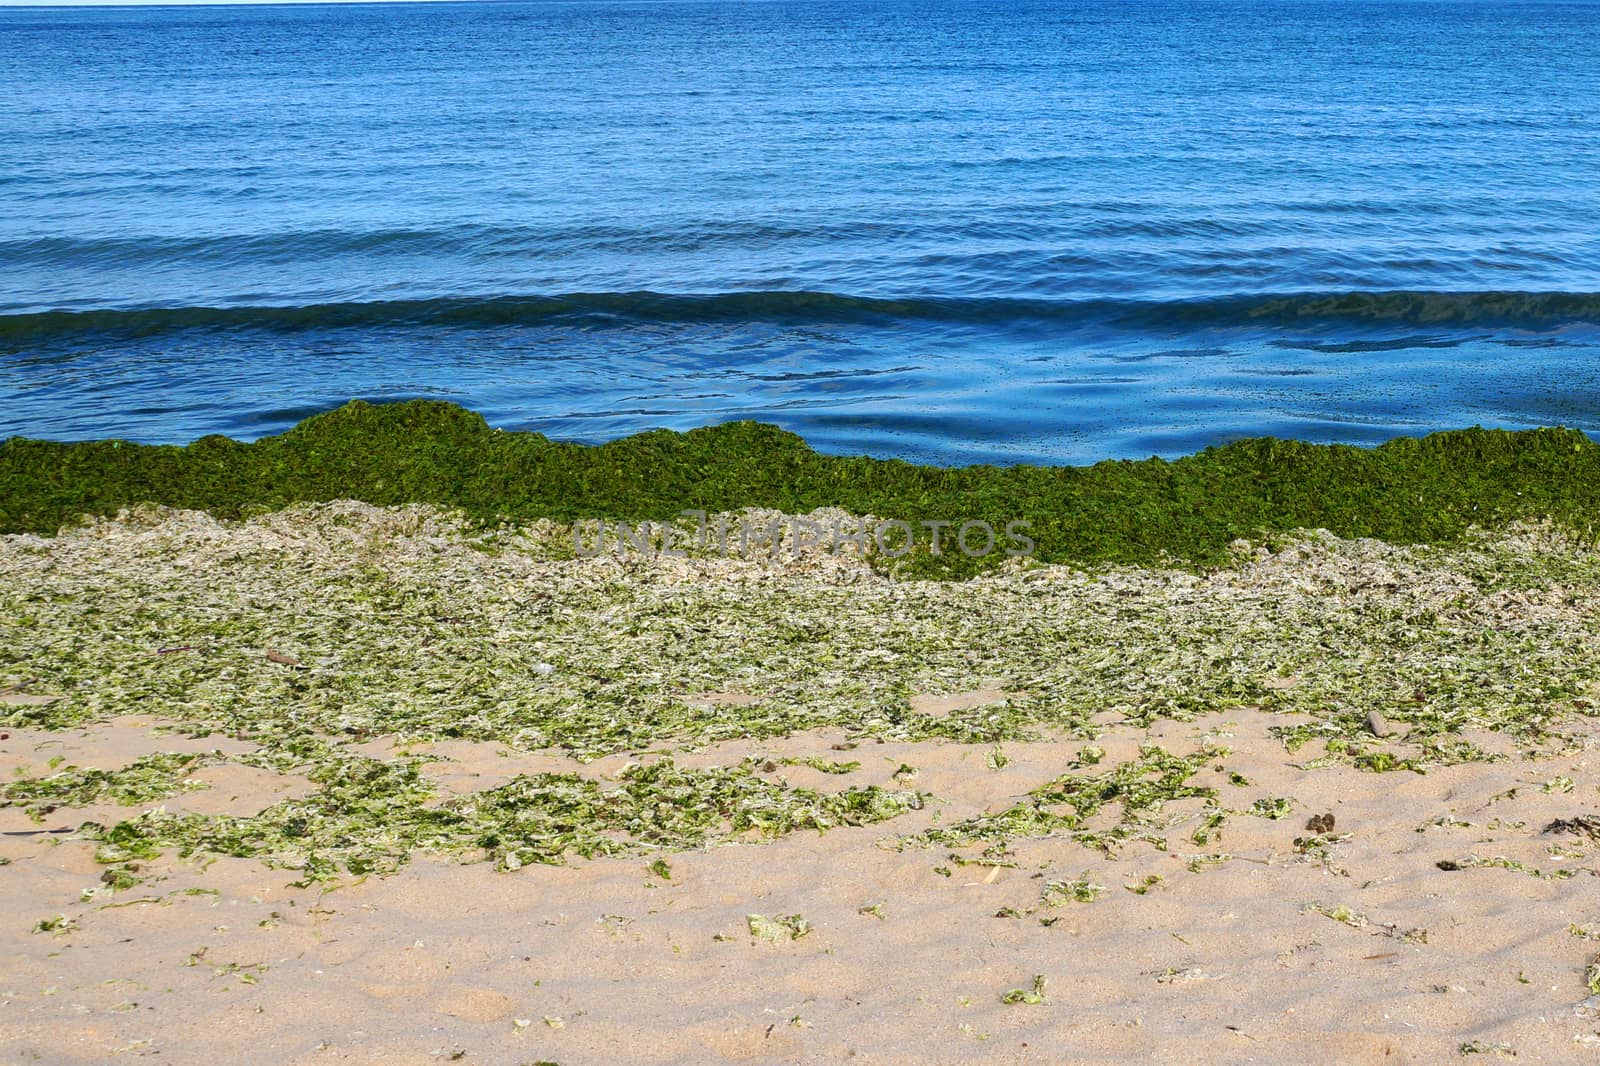 green algae on an empty sandy beach.